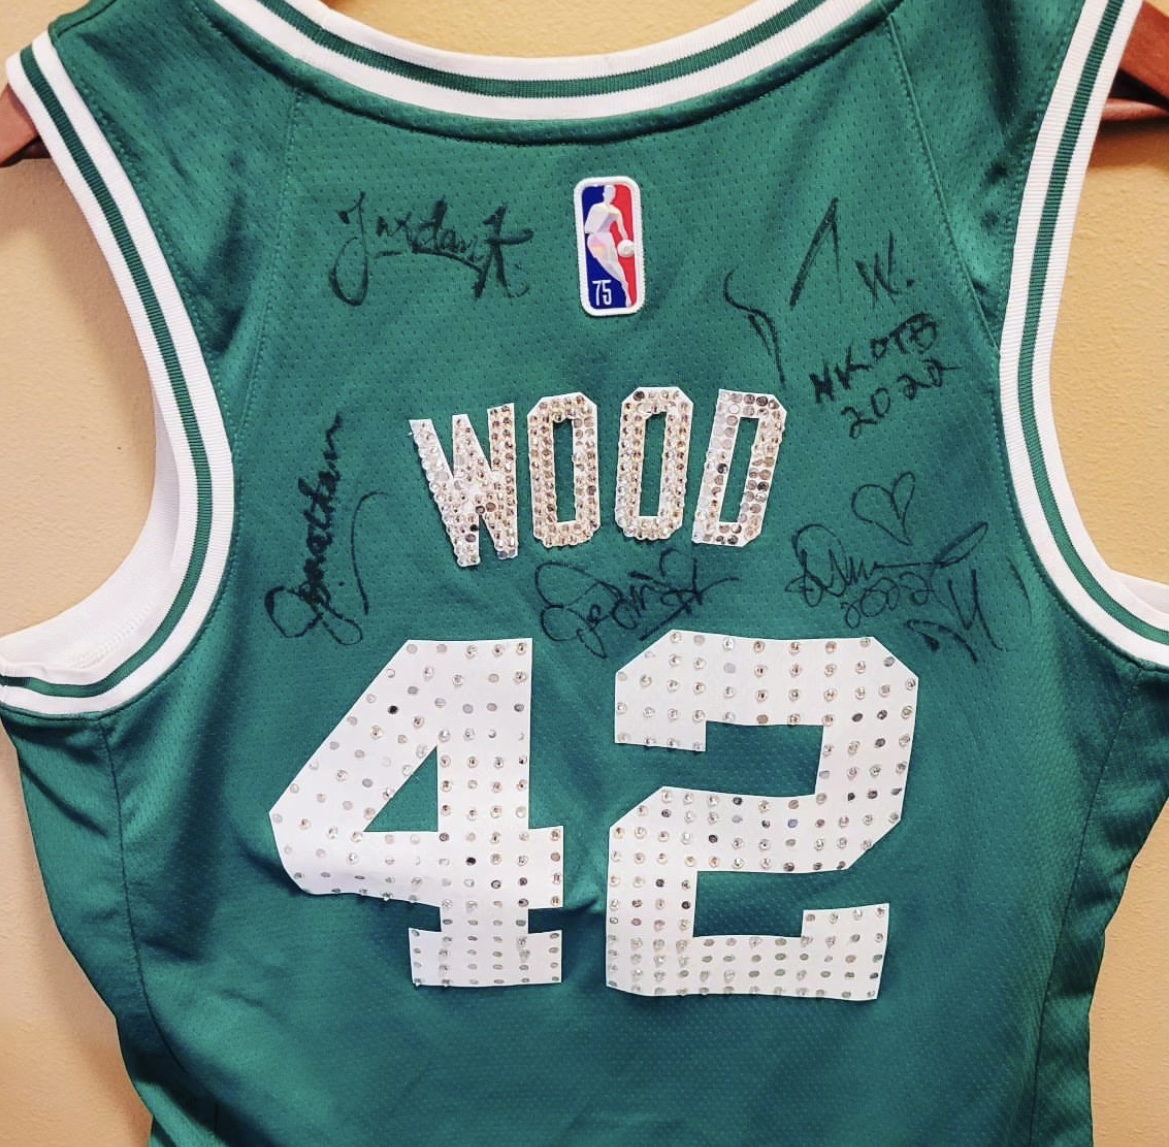 NKOTB News: Win a NKOTB Autographed Boston Celtics Jersey